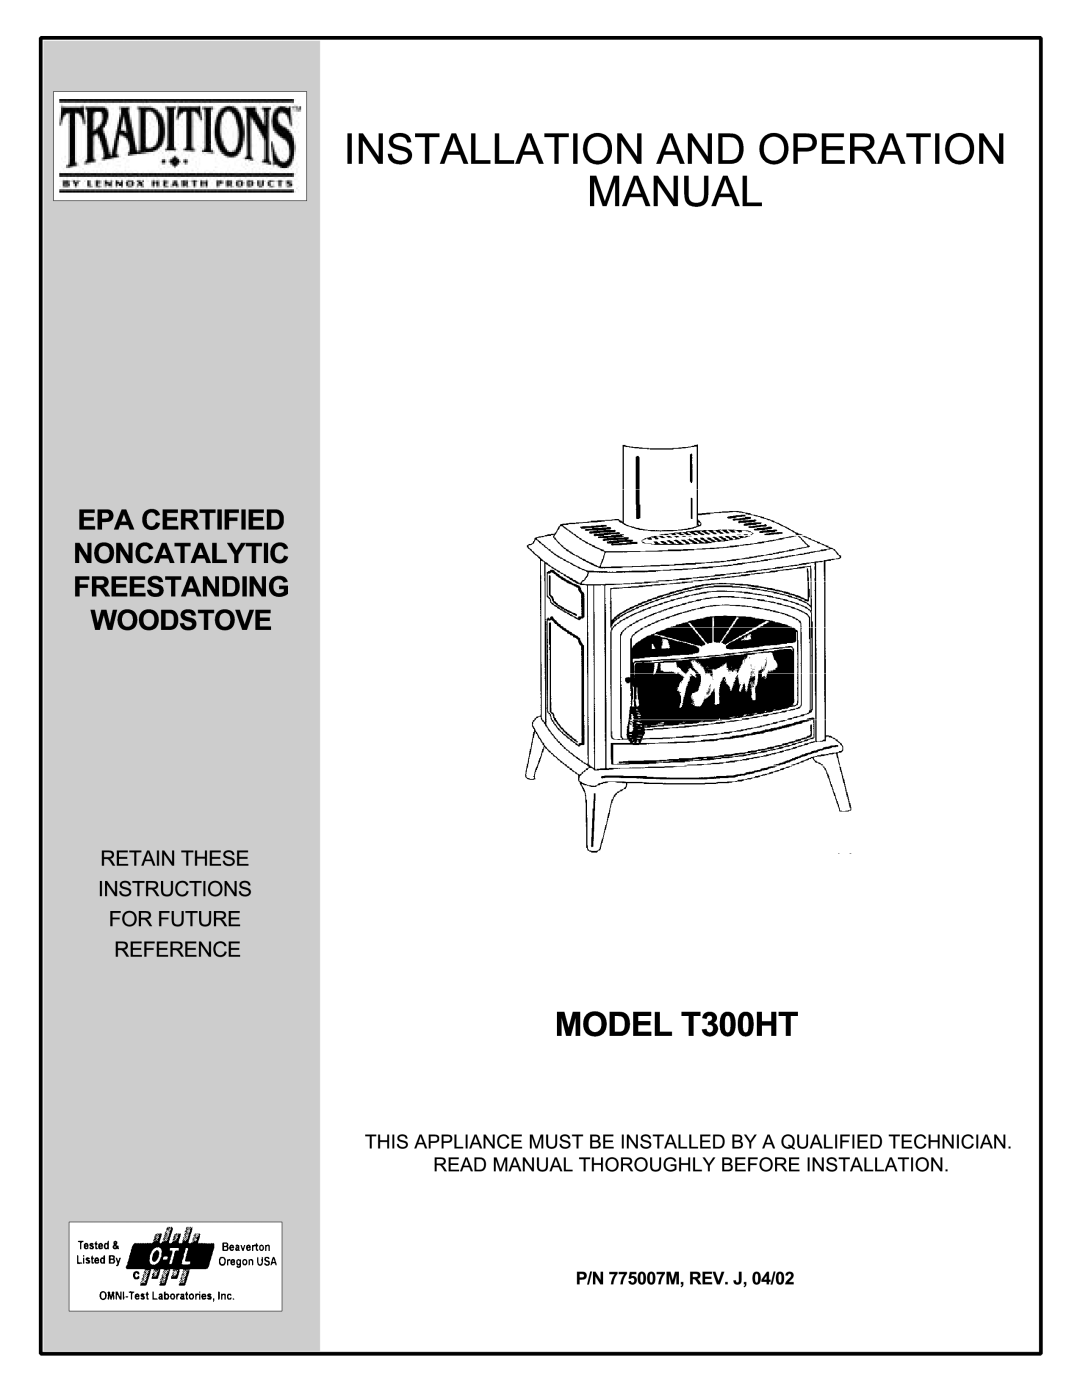 Lennox Hearth manual Installationmanualandoperation, Woodstove, Reainthese, Epacertified, MODELT300HT, Noncatalytic 